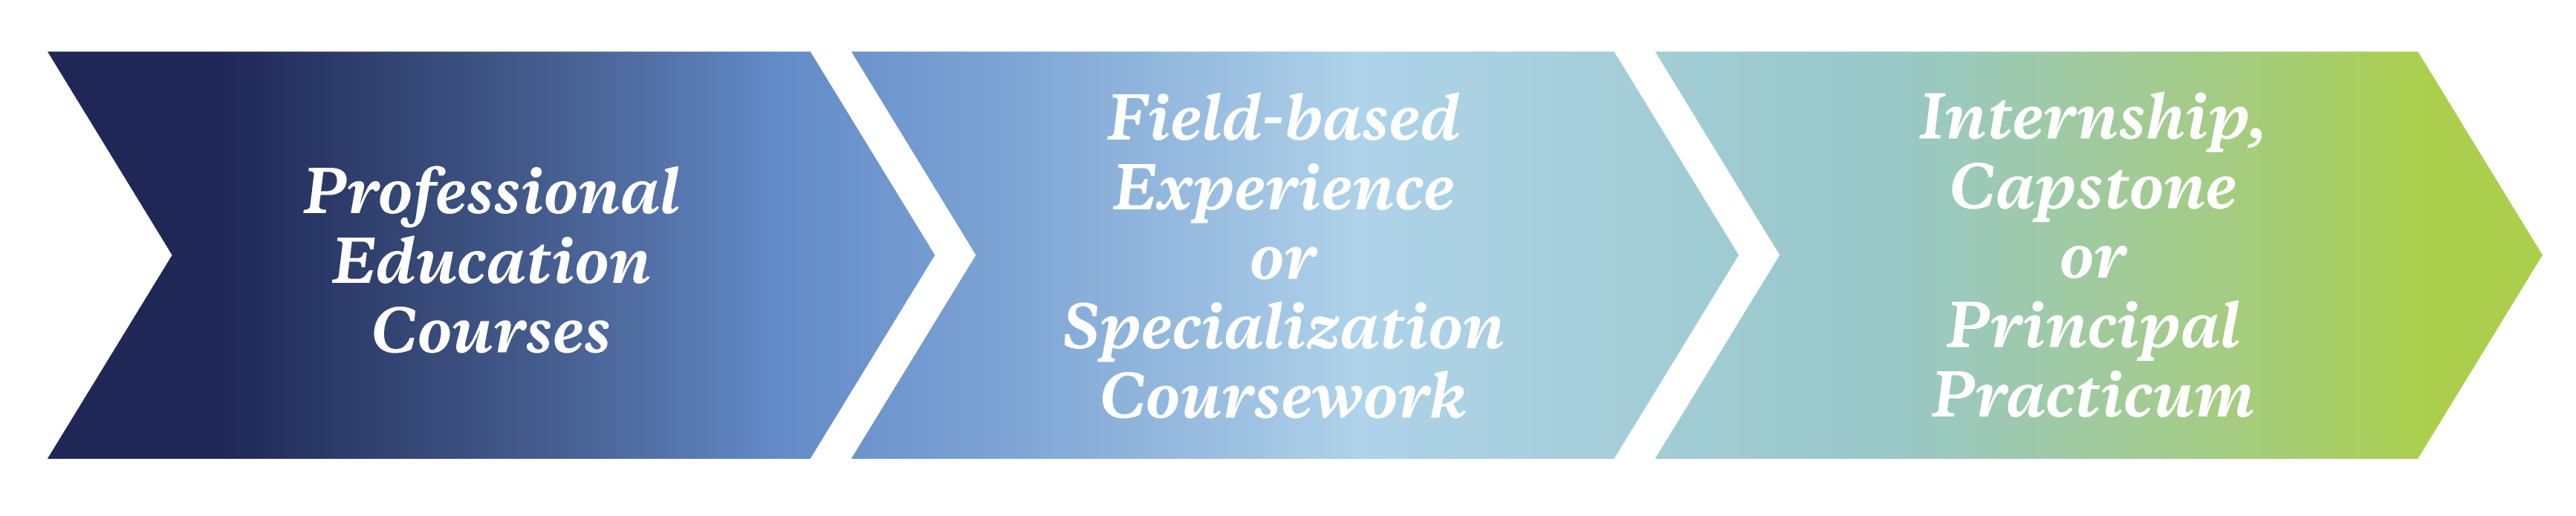 Professional Education Courses, In-School Fieldwork, Capstone or Principal Practicum